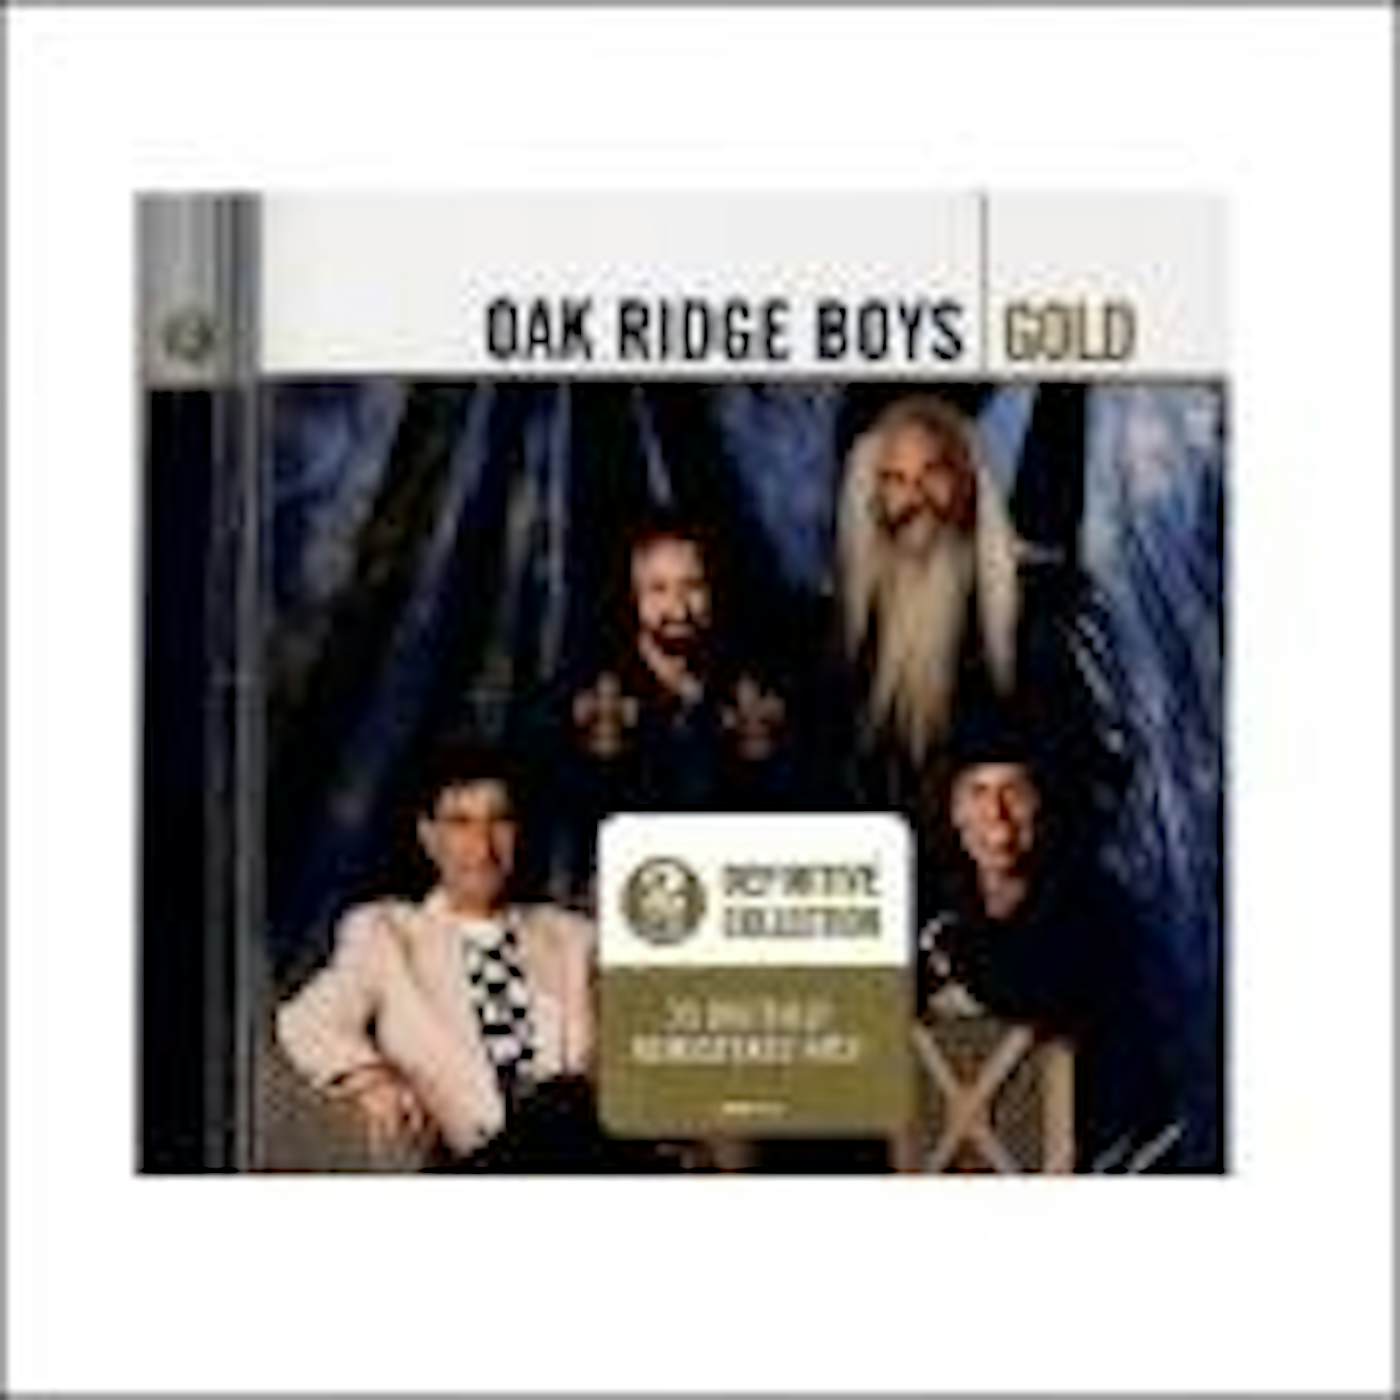 The Oak Ridge Boys CD- Gold